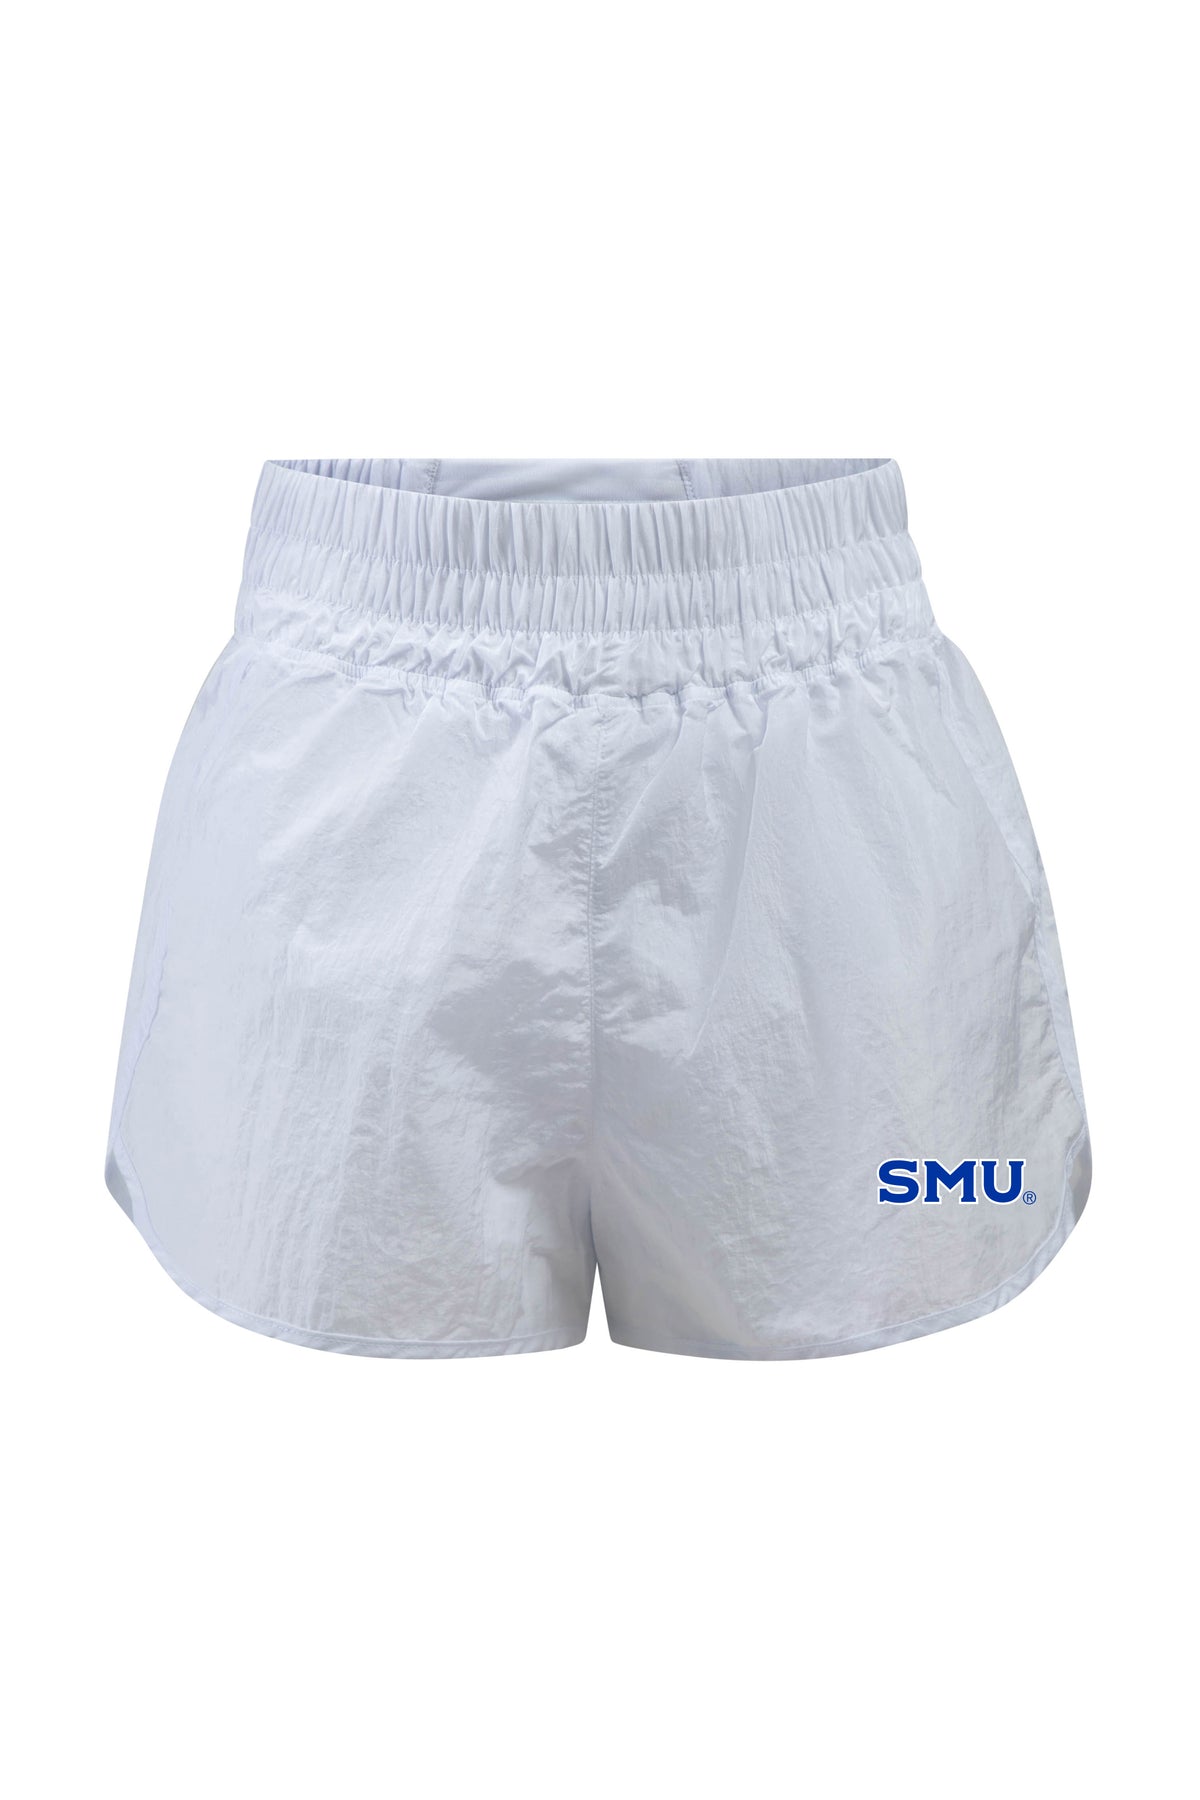 Southern Methodist University Boxer Short